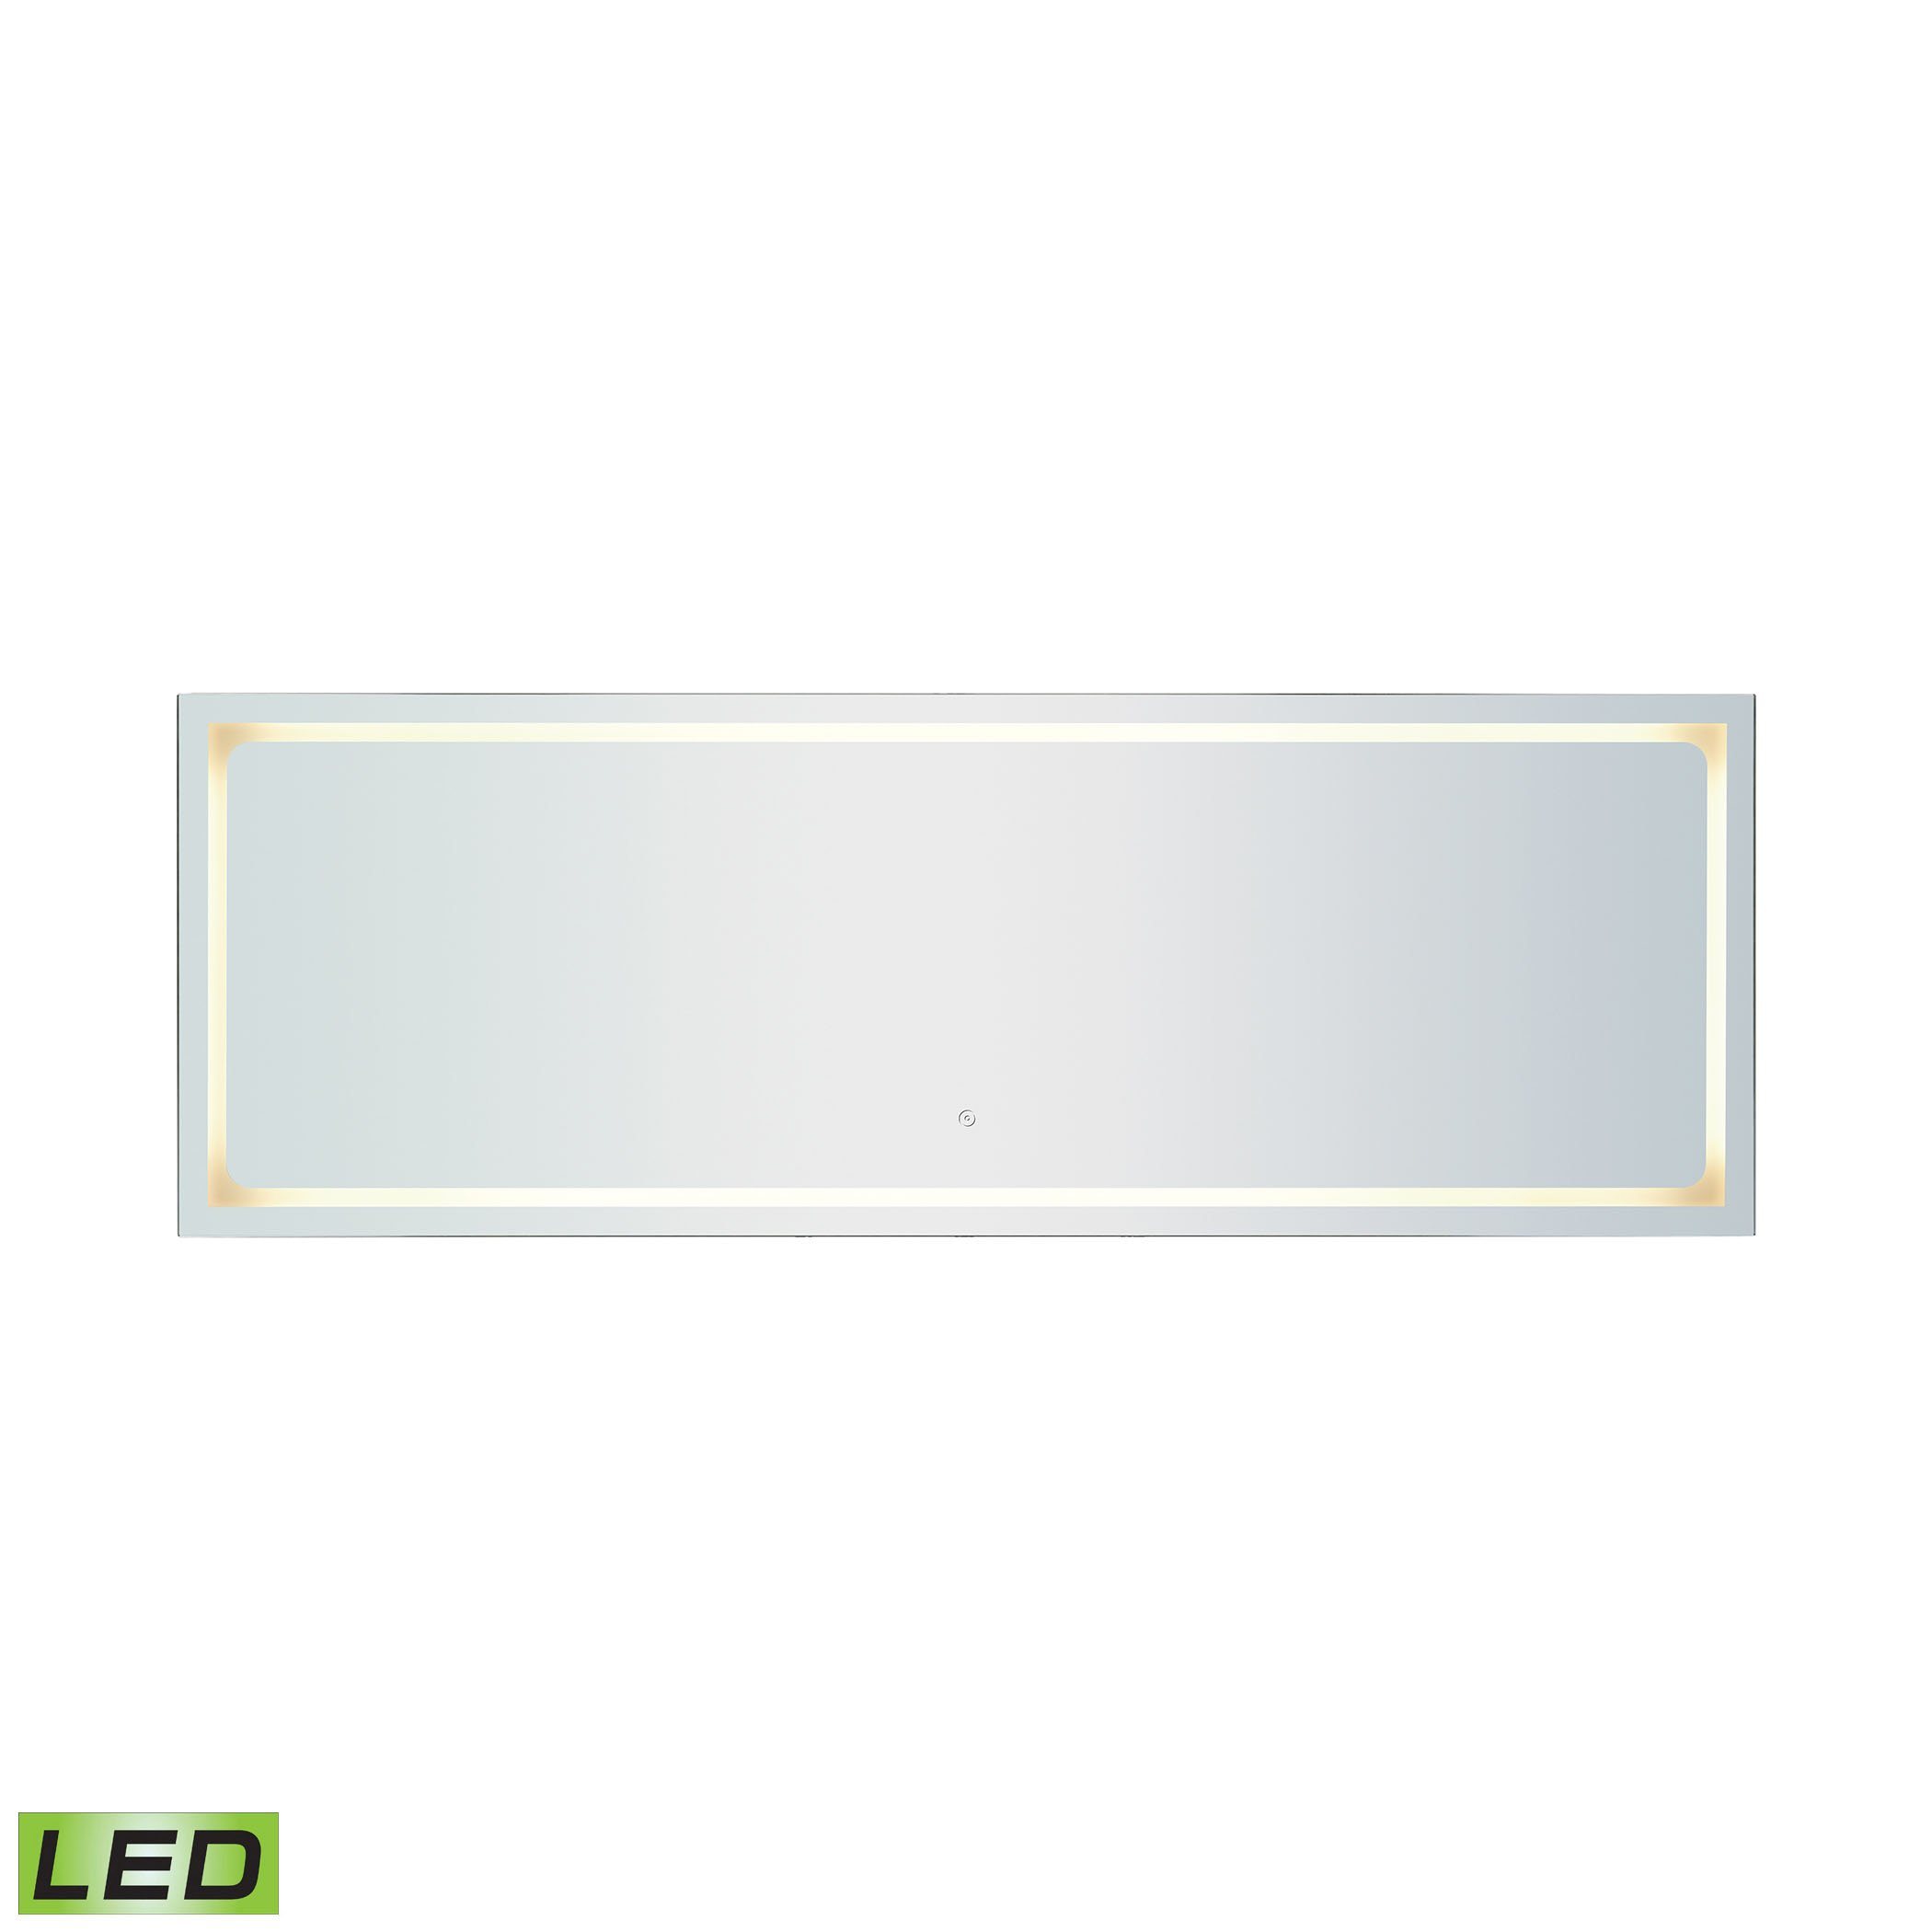 18x55-inch Full-length LED Mirror Mirrors Ryvyr 